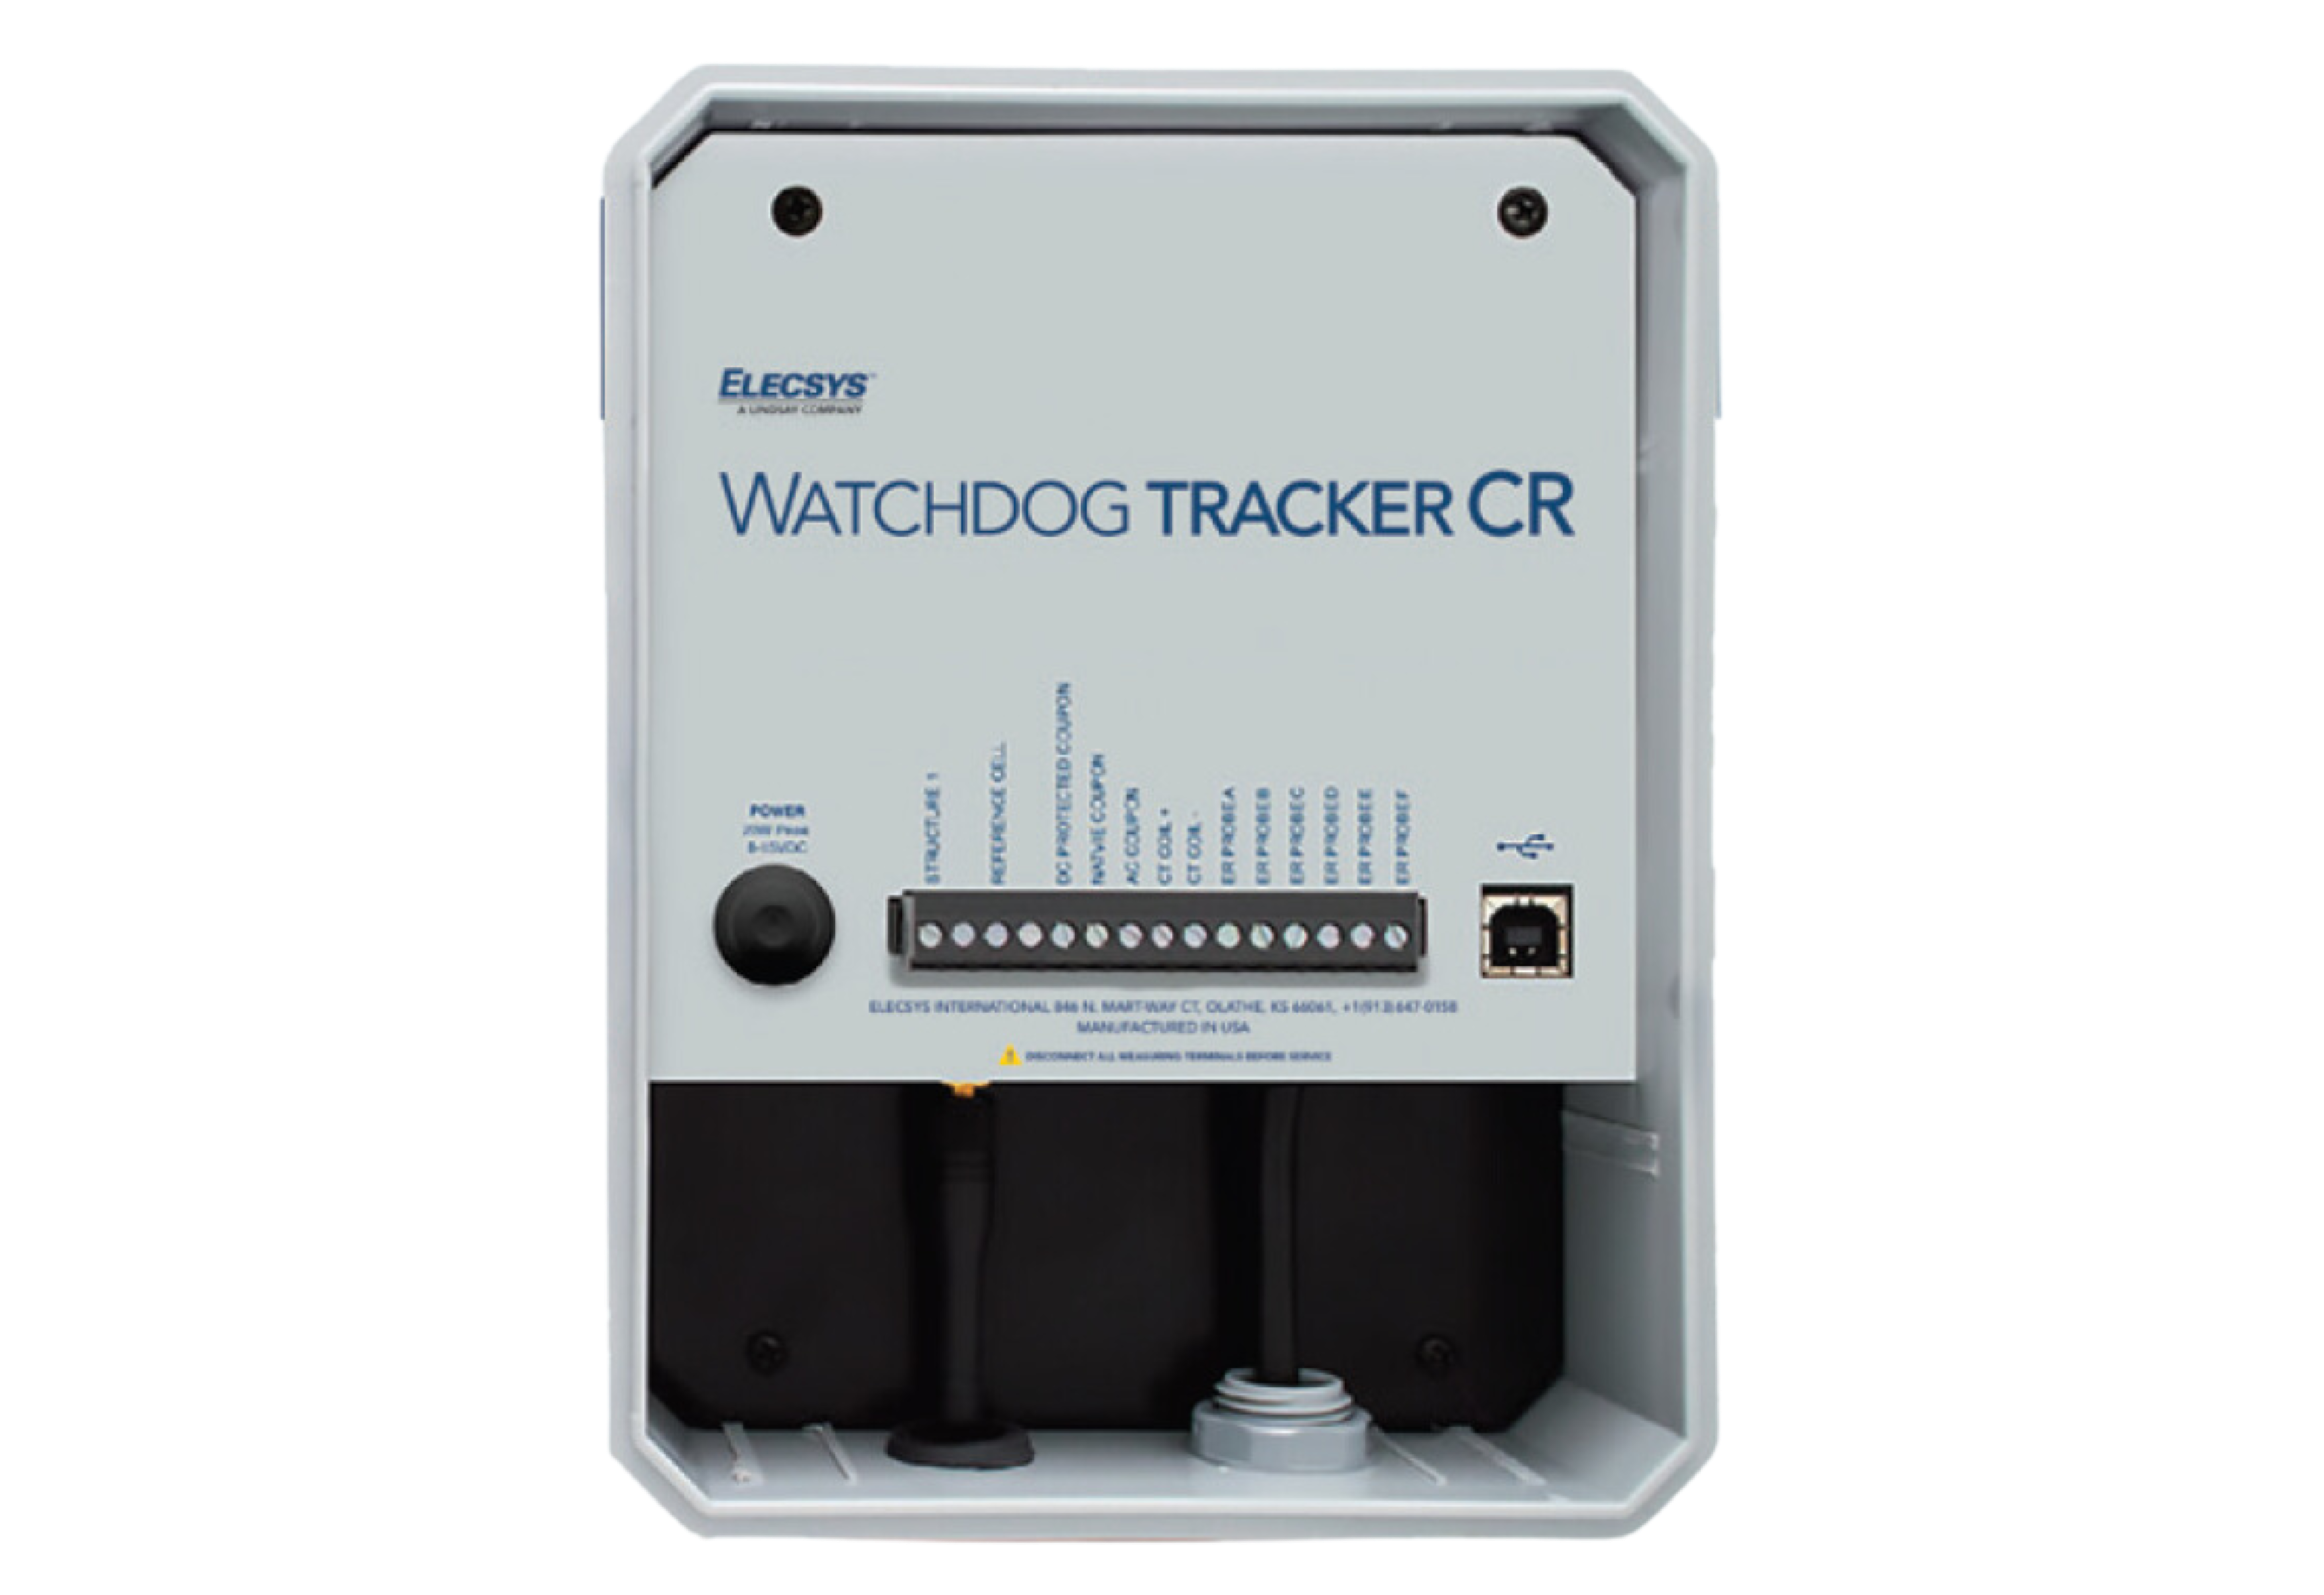 NEW! Elecsys Watchdog Tracker CR